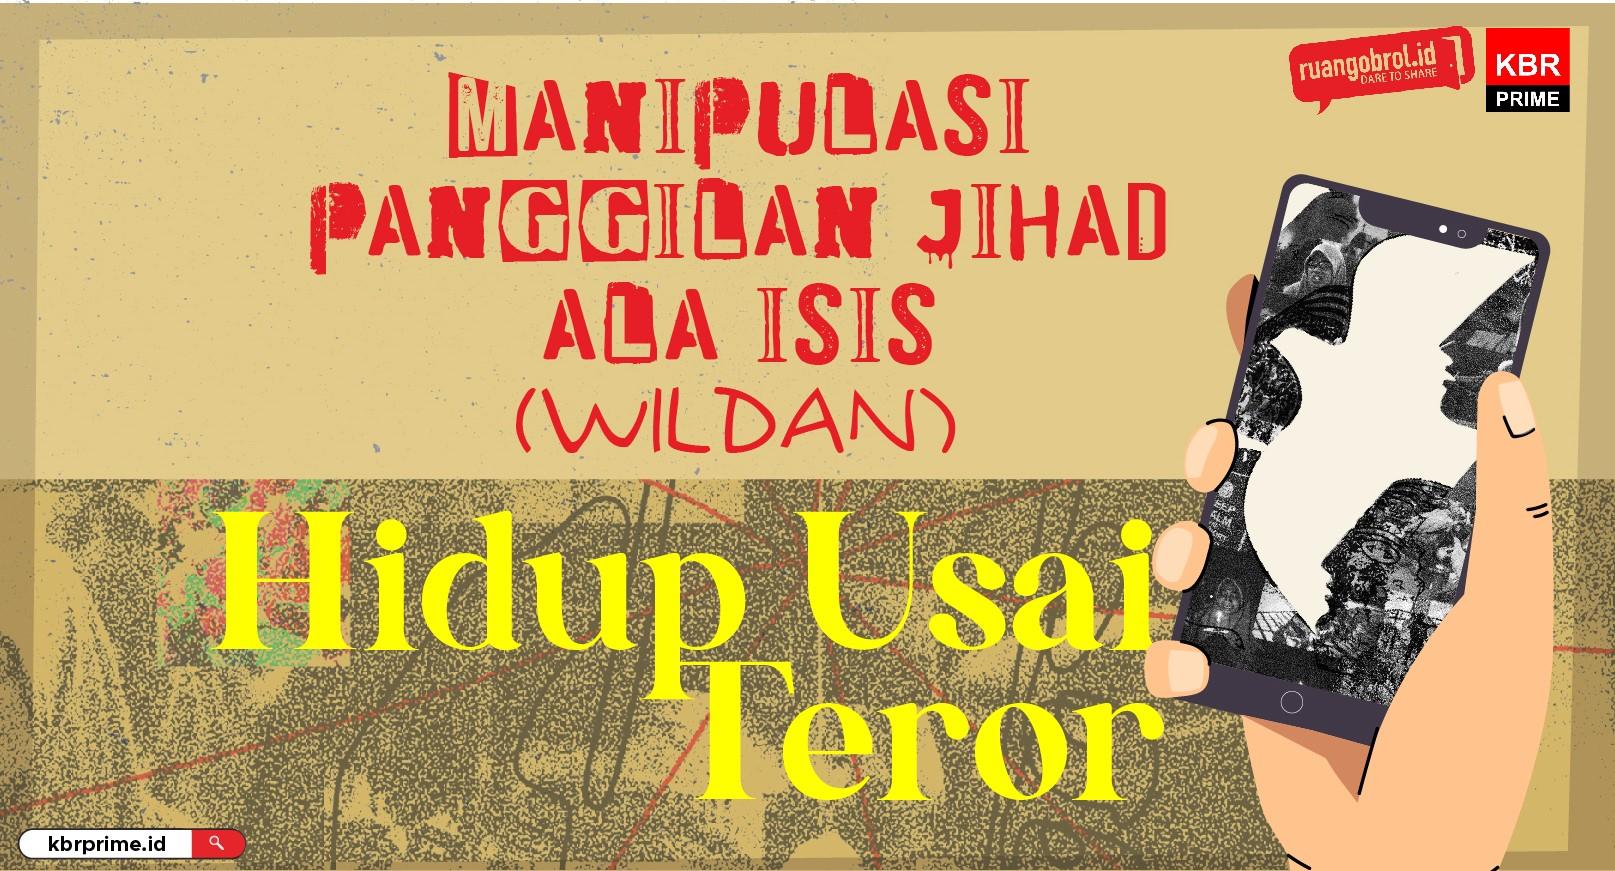 HIDUP USAI TEROR Season 2 : Manipulasi Panggilan Jihad a la ISIS (Part 2)